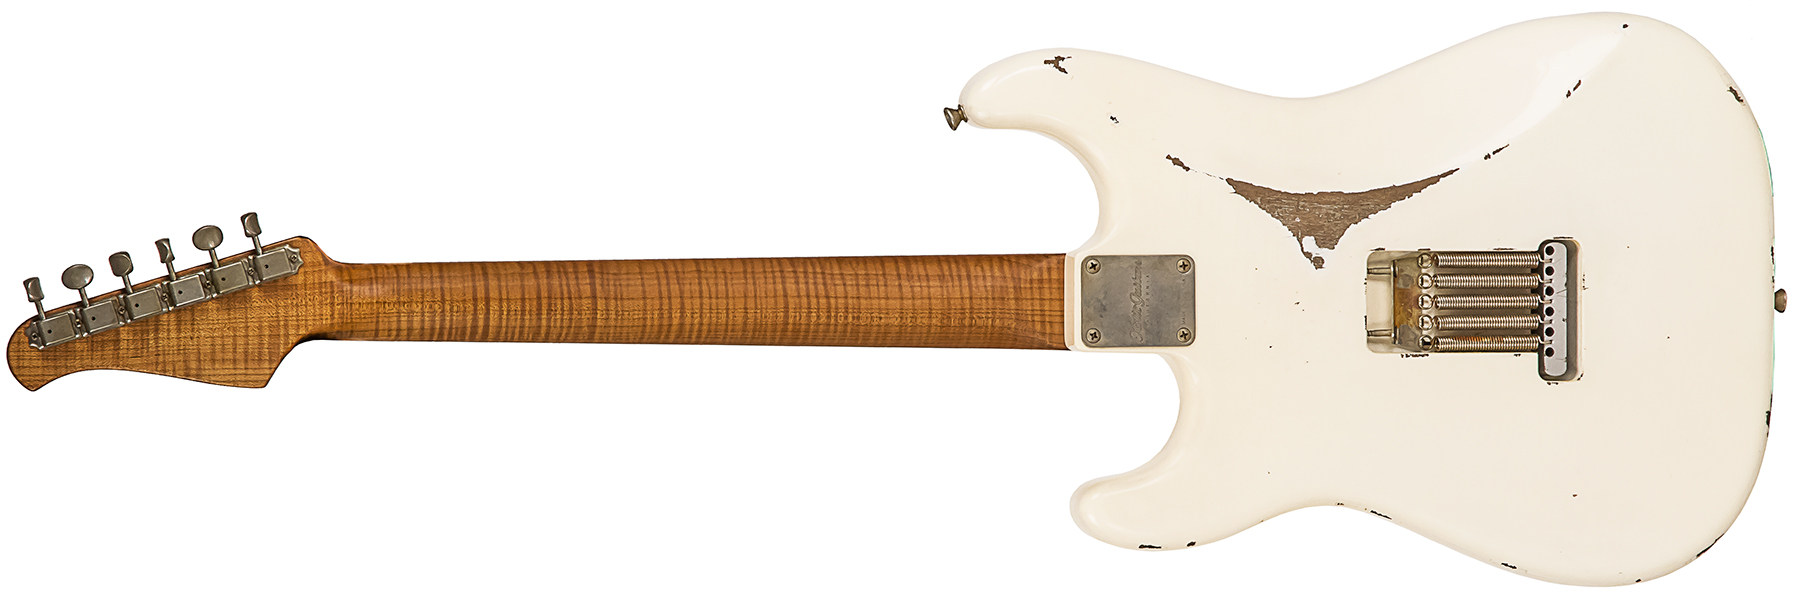 Xotic Xsc-1 Alder California Class 3s Rw #1624r - Heavy Aging Vintage White - Str shape electric guitar - Variation 1